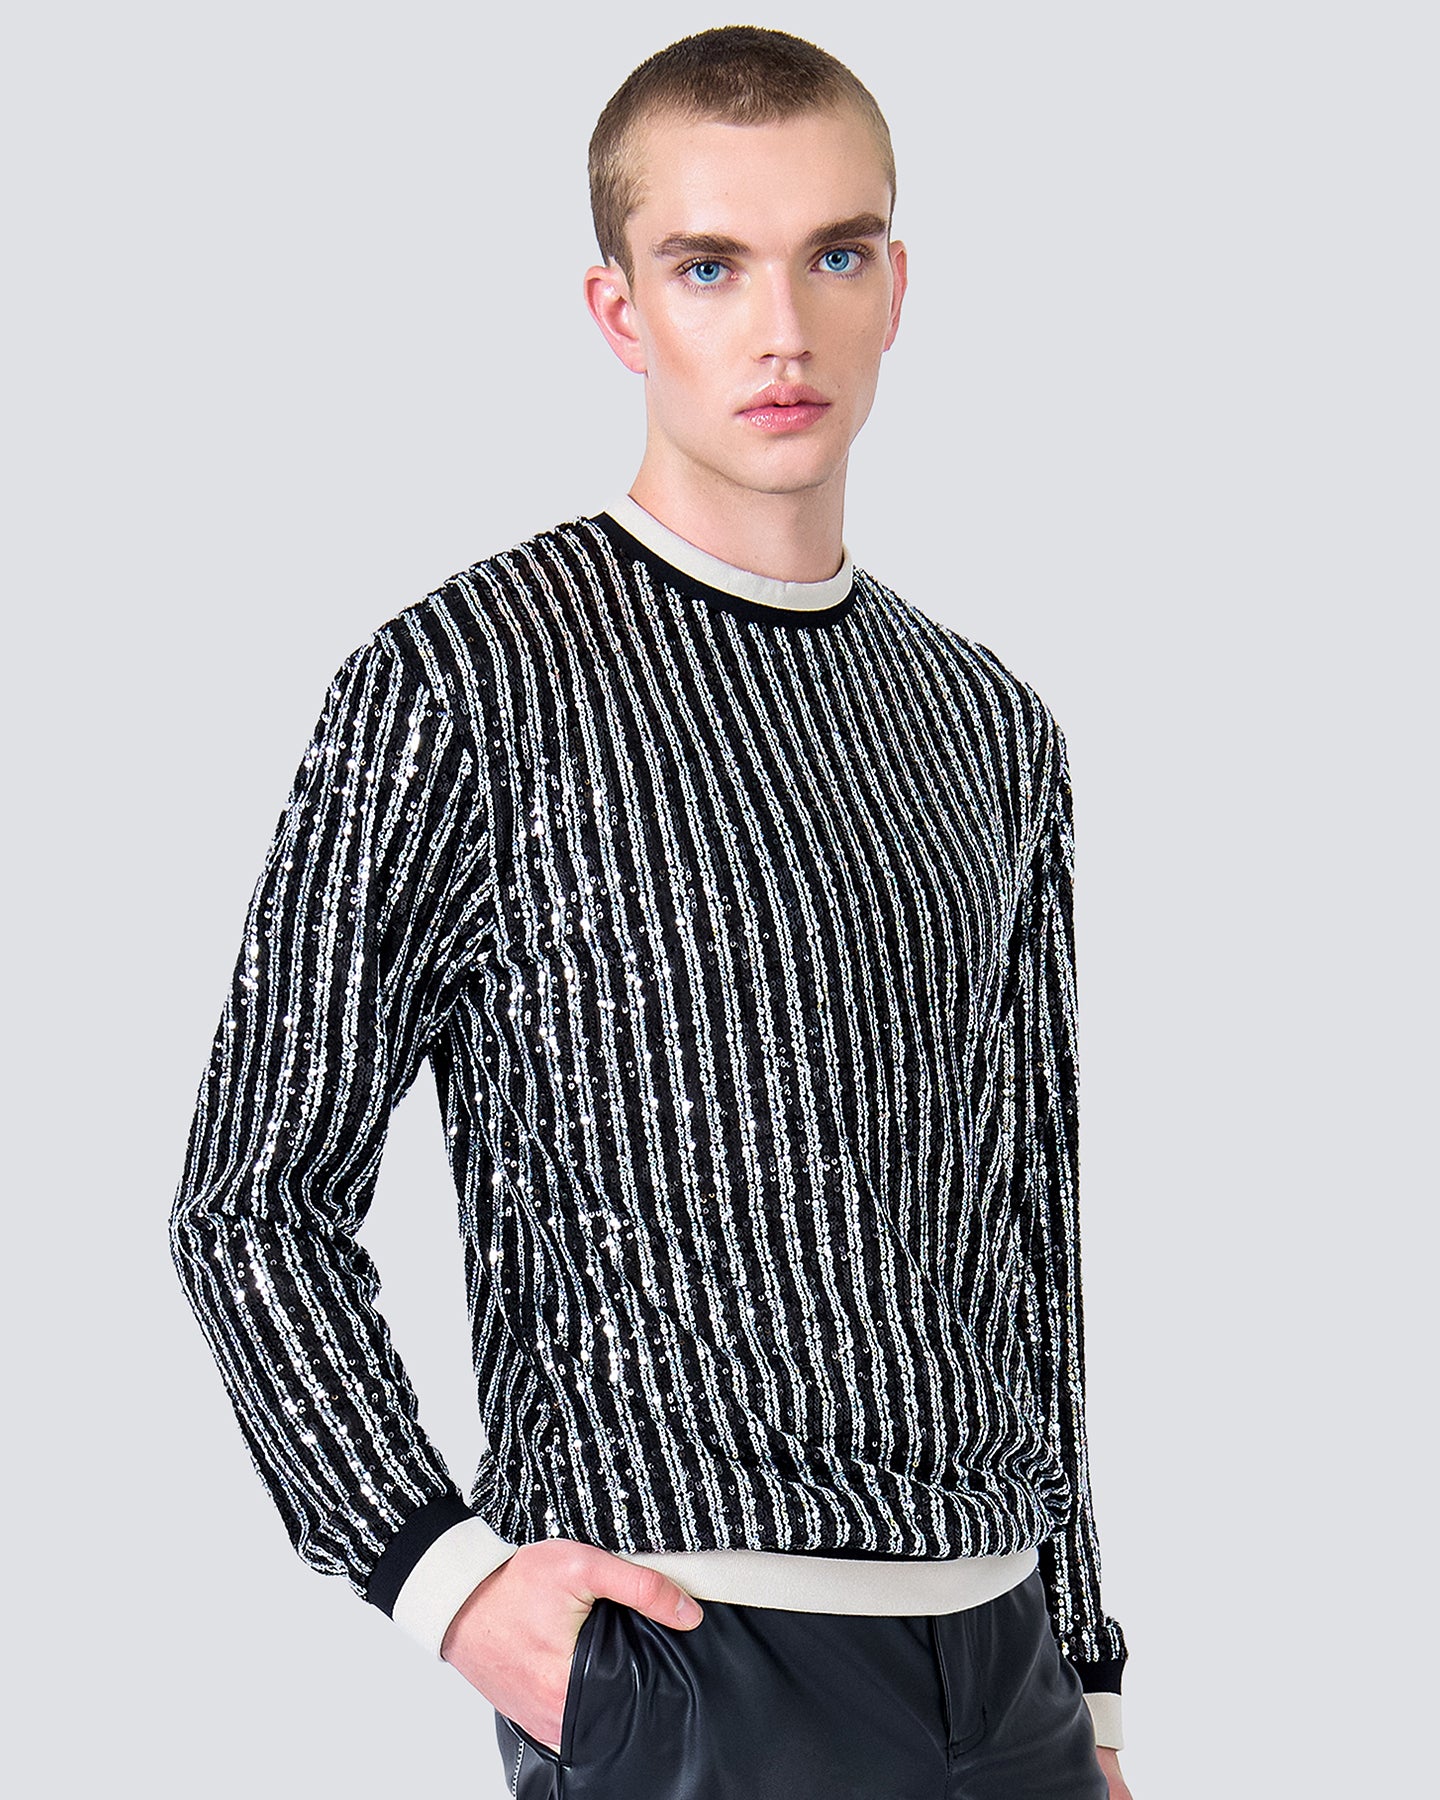 Lennox Sequin Sweater